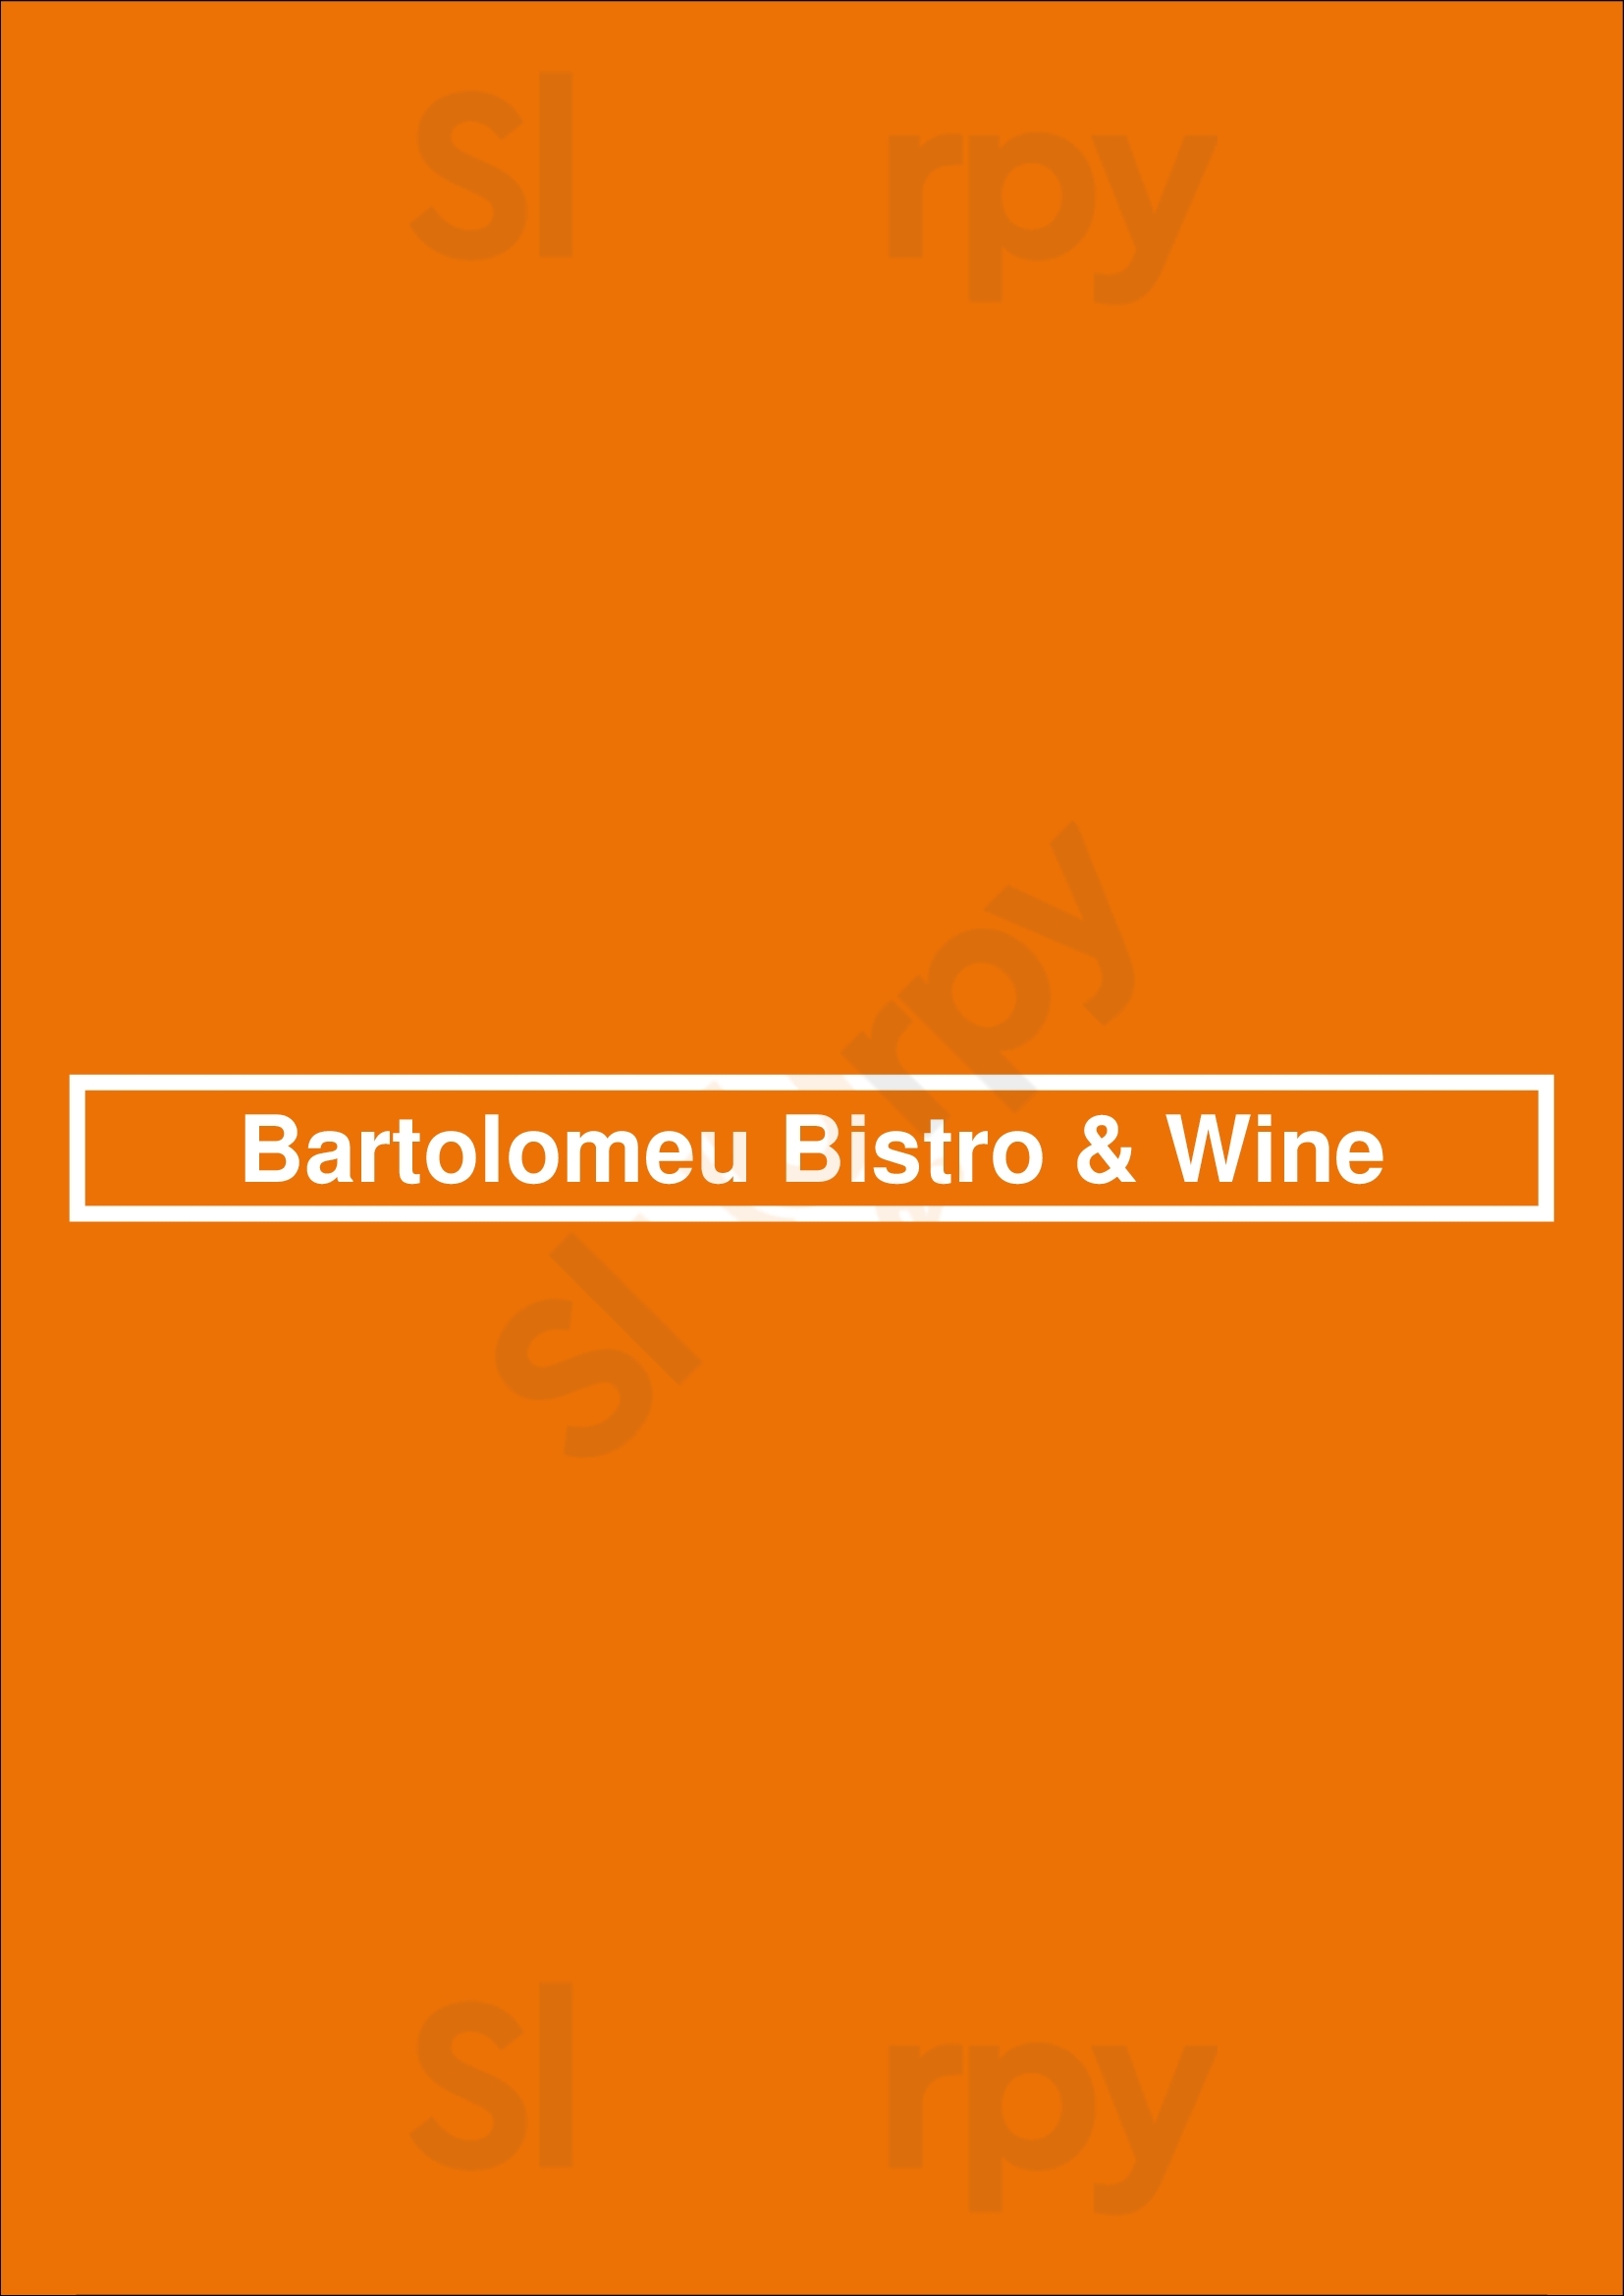 Bartolomeu Bistro & Wine Porto Menu - 1